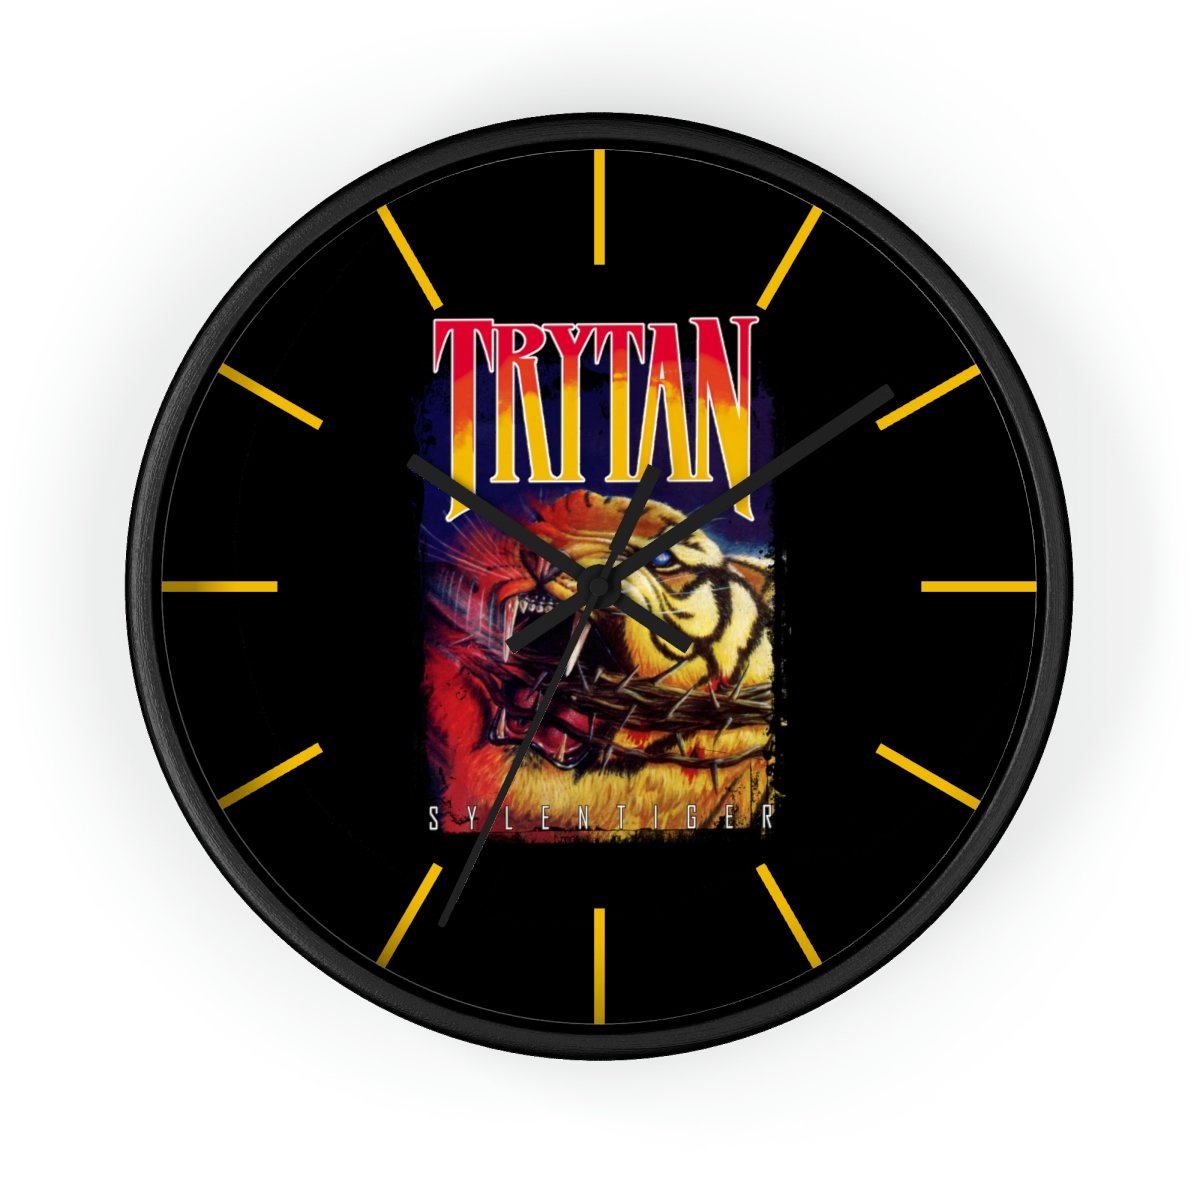 Trytan – Sylentiger Wall clock